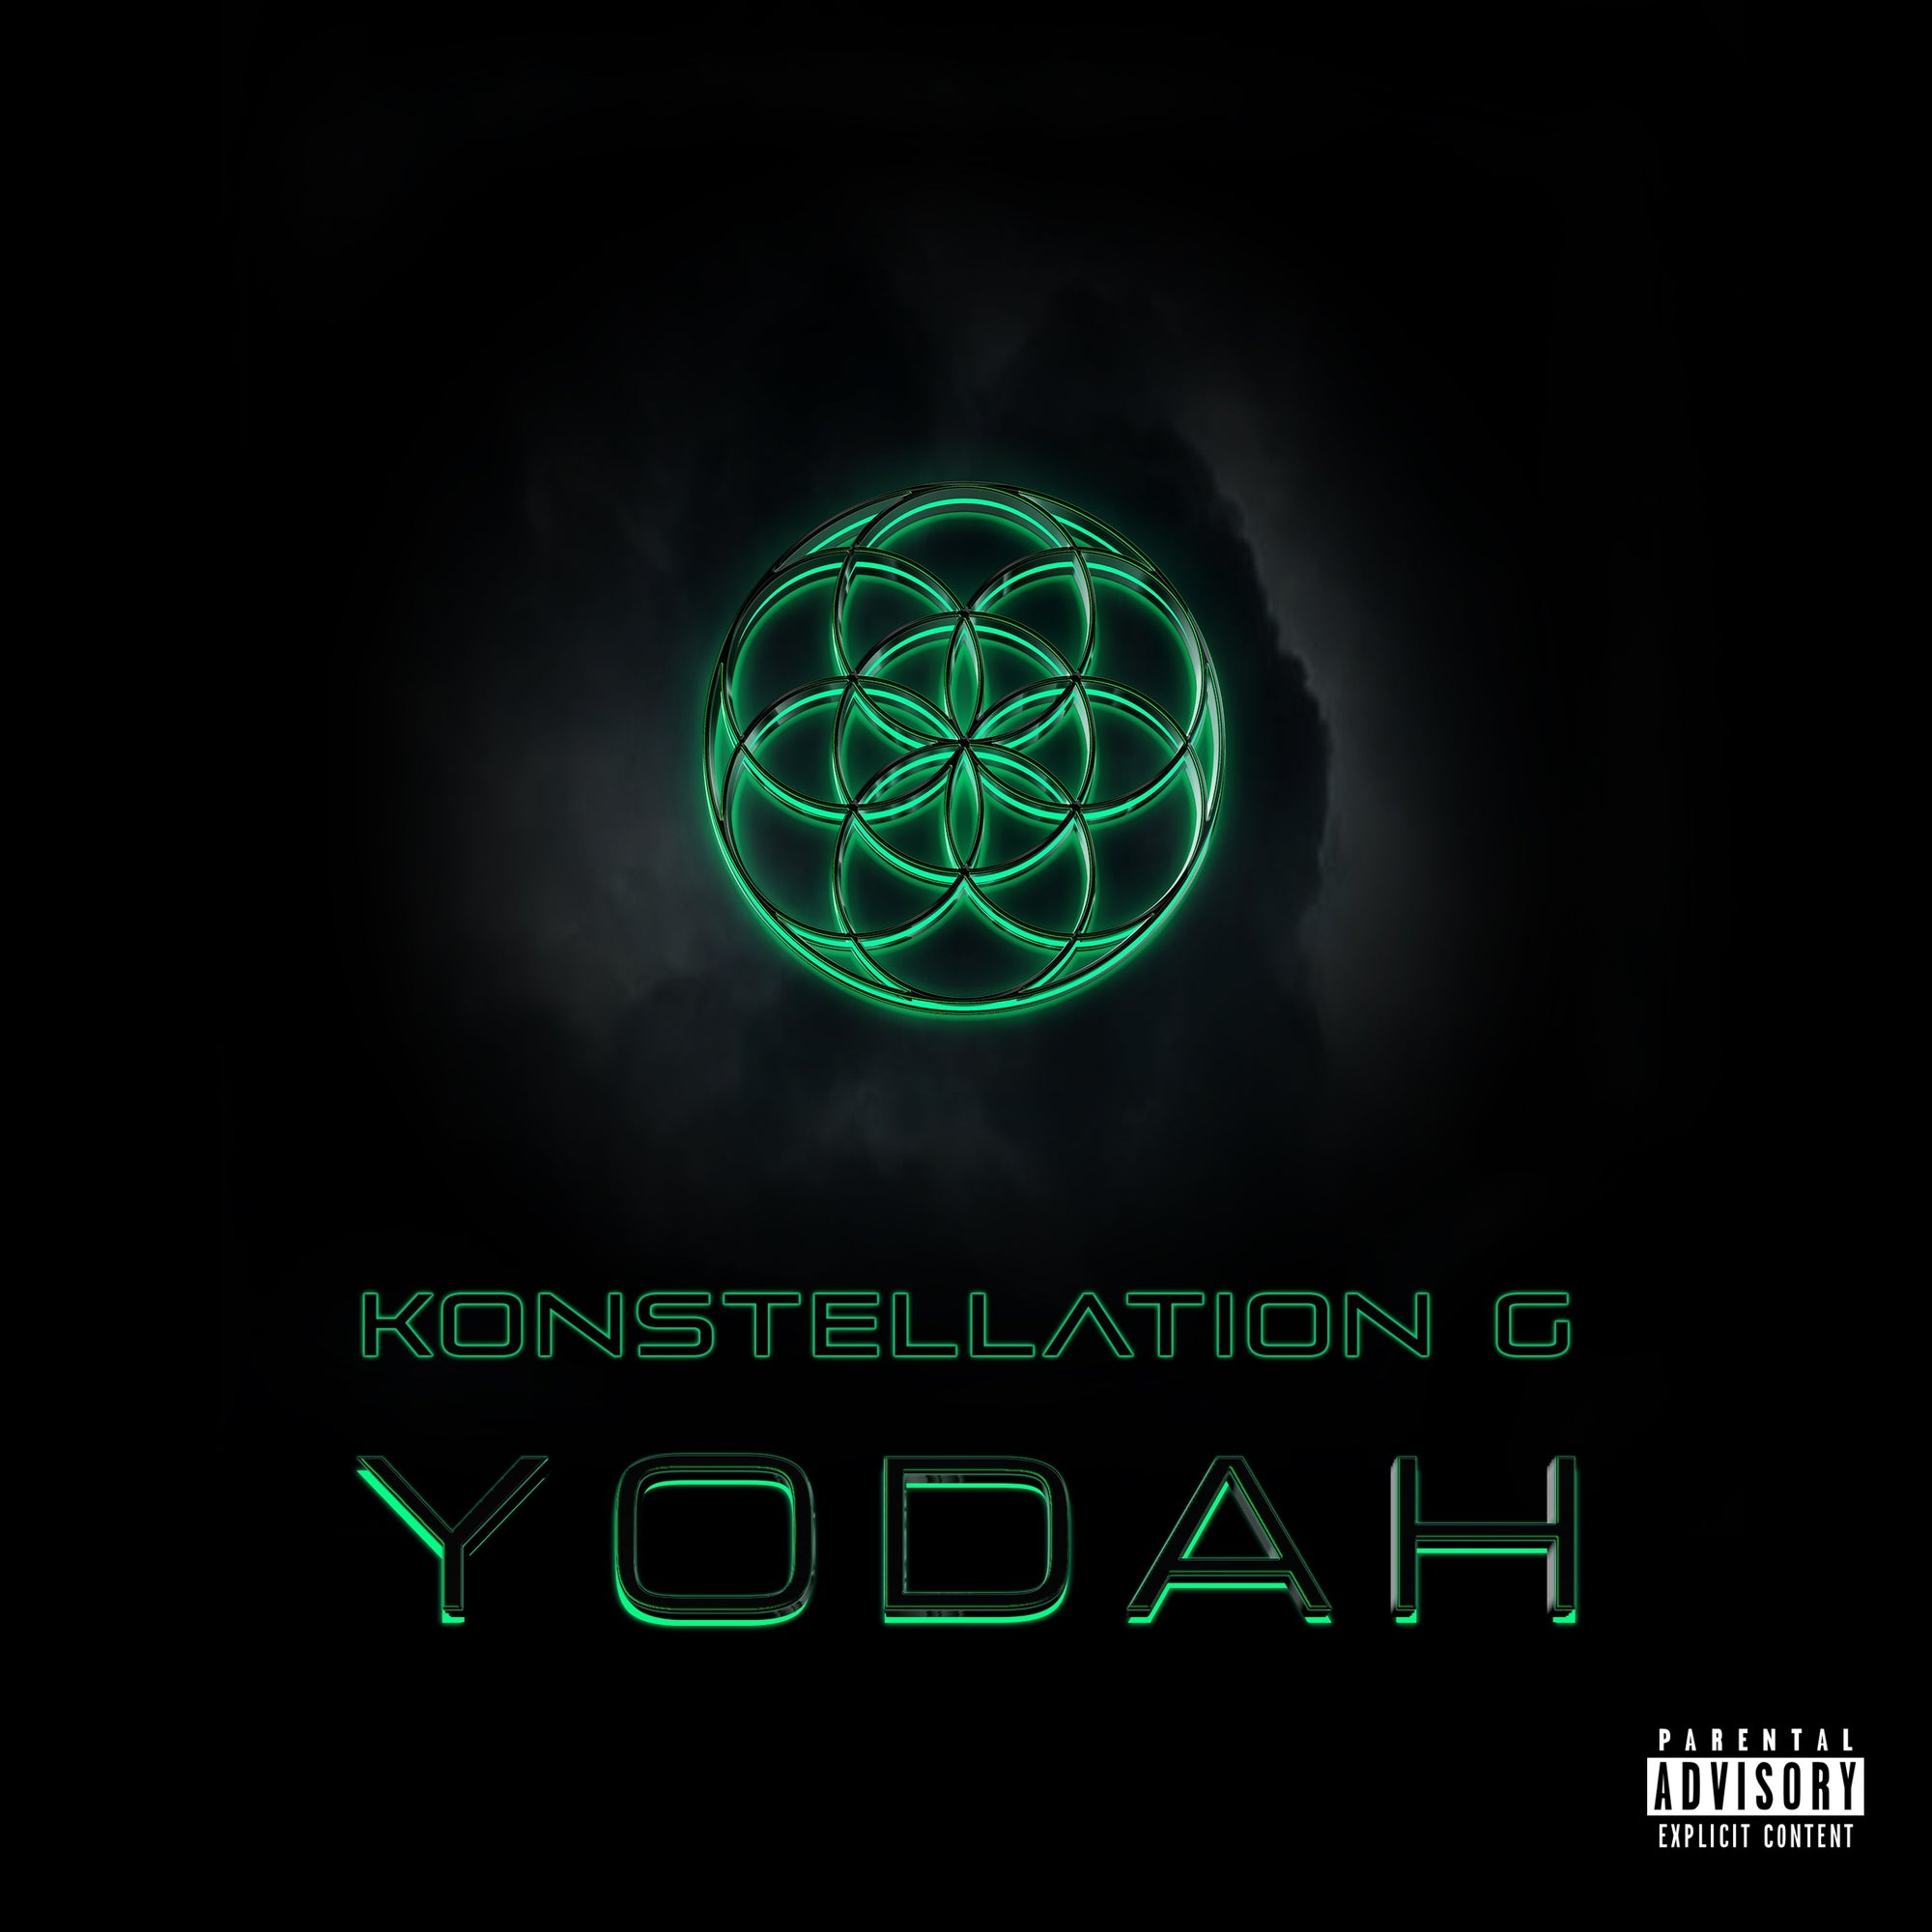 Konstellation G – ‘Yodah’